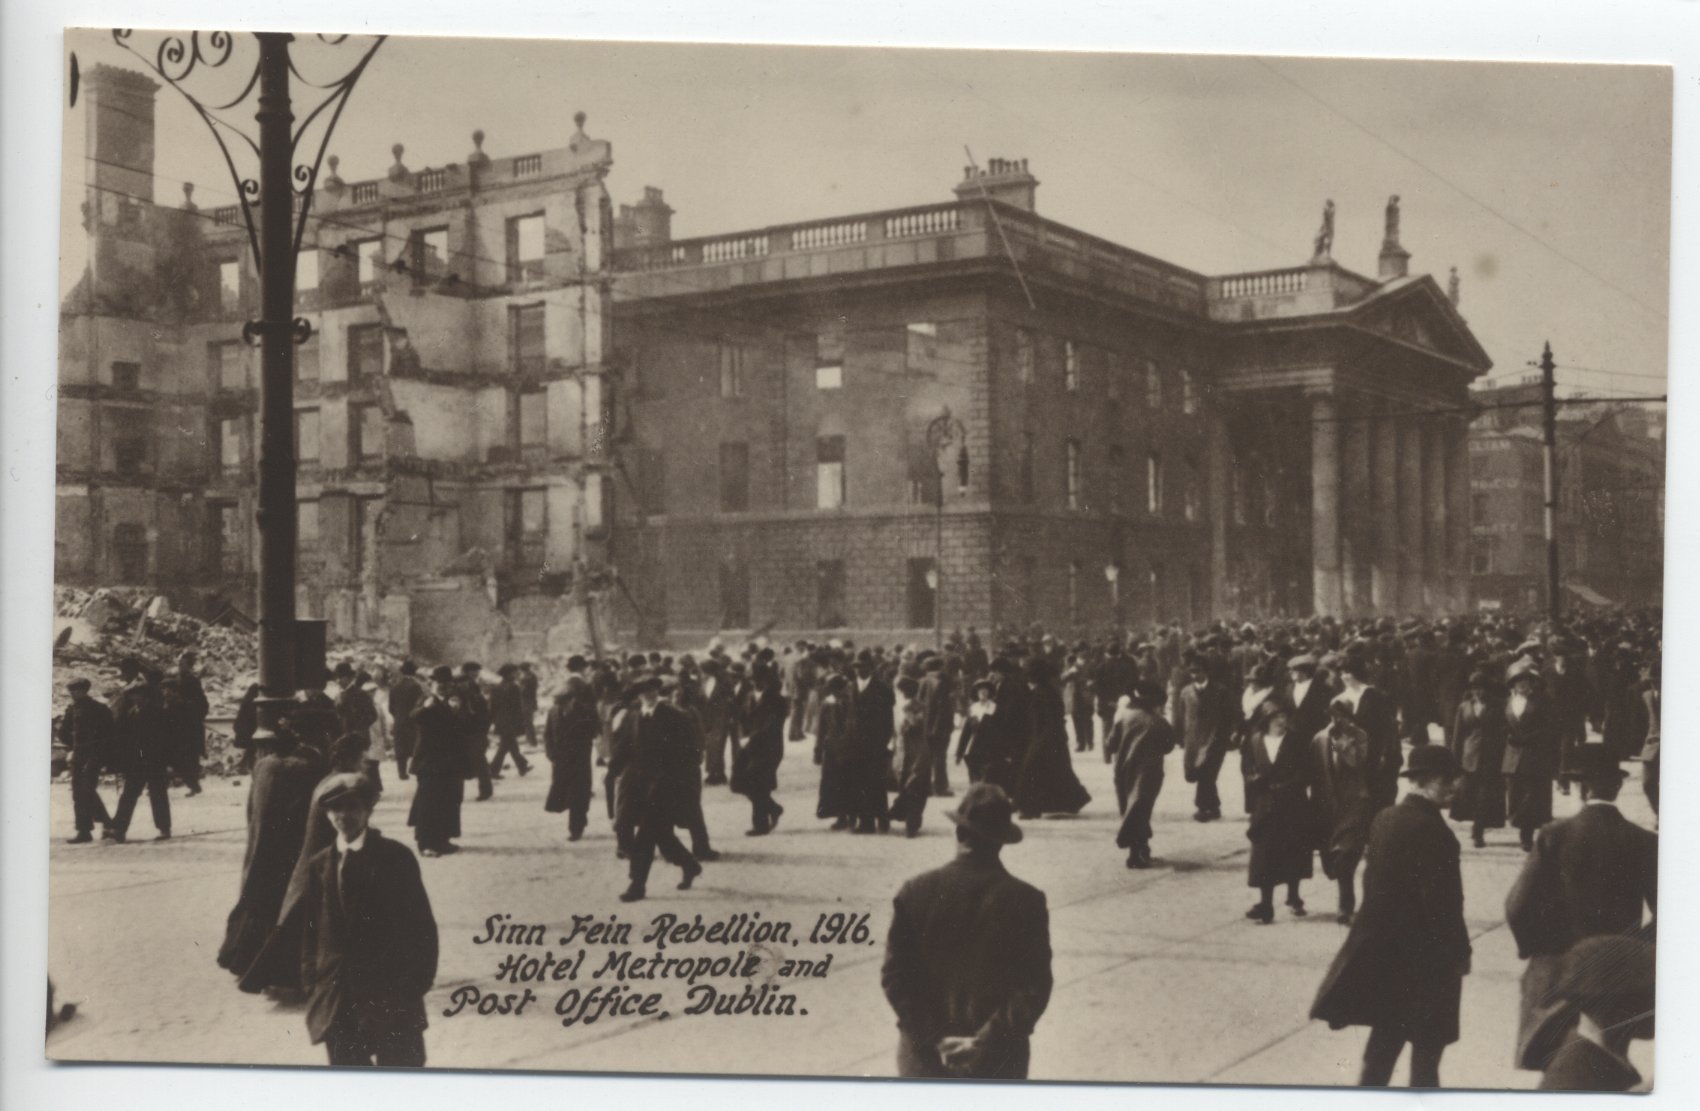 Sinn Fein Rebellion 1916. Hotel Metropole and Post Office Dublin